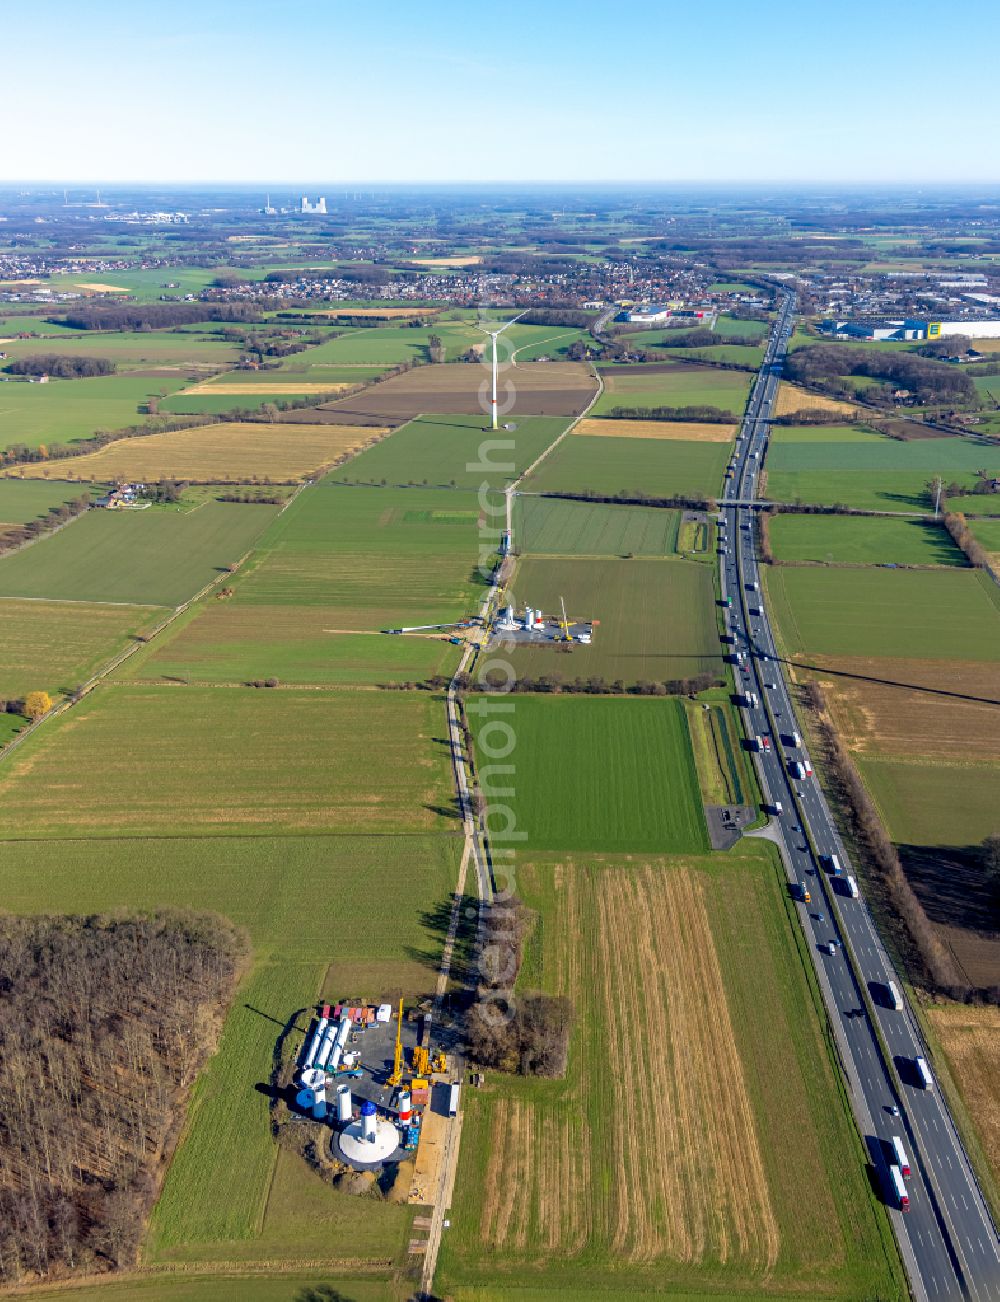 Aerial image Freiske - Construction site for wind turbine installation auf einem Feld on Autobahn BAB A2 in Freiske at Ruhrgebiet in the state North Rhine-Westphalia, Germany